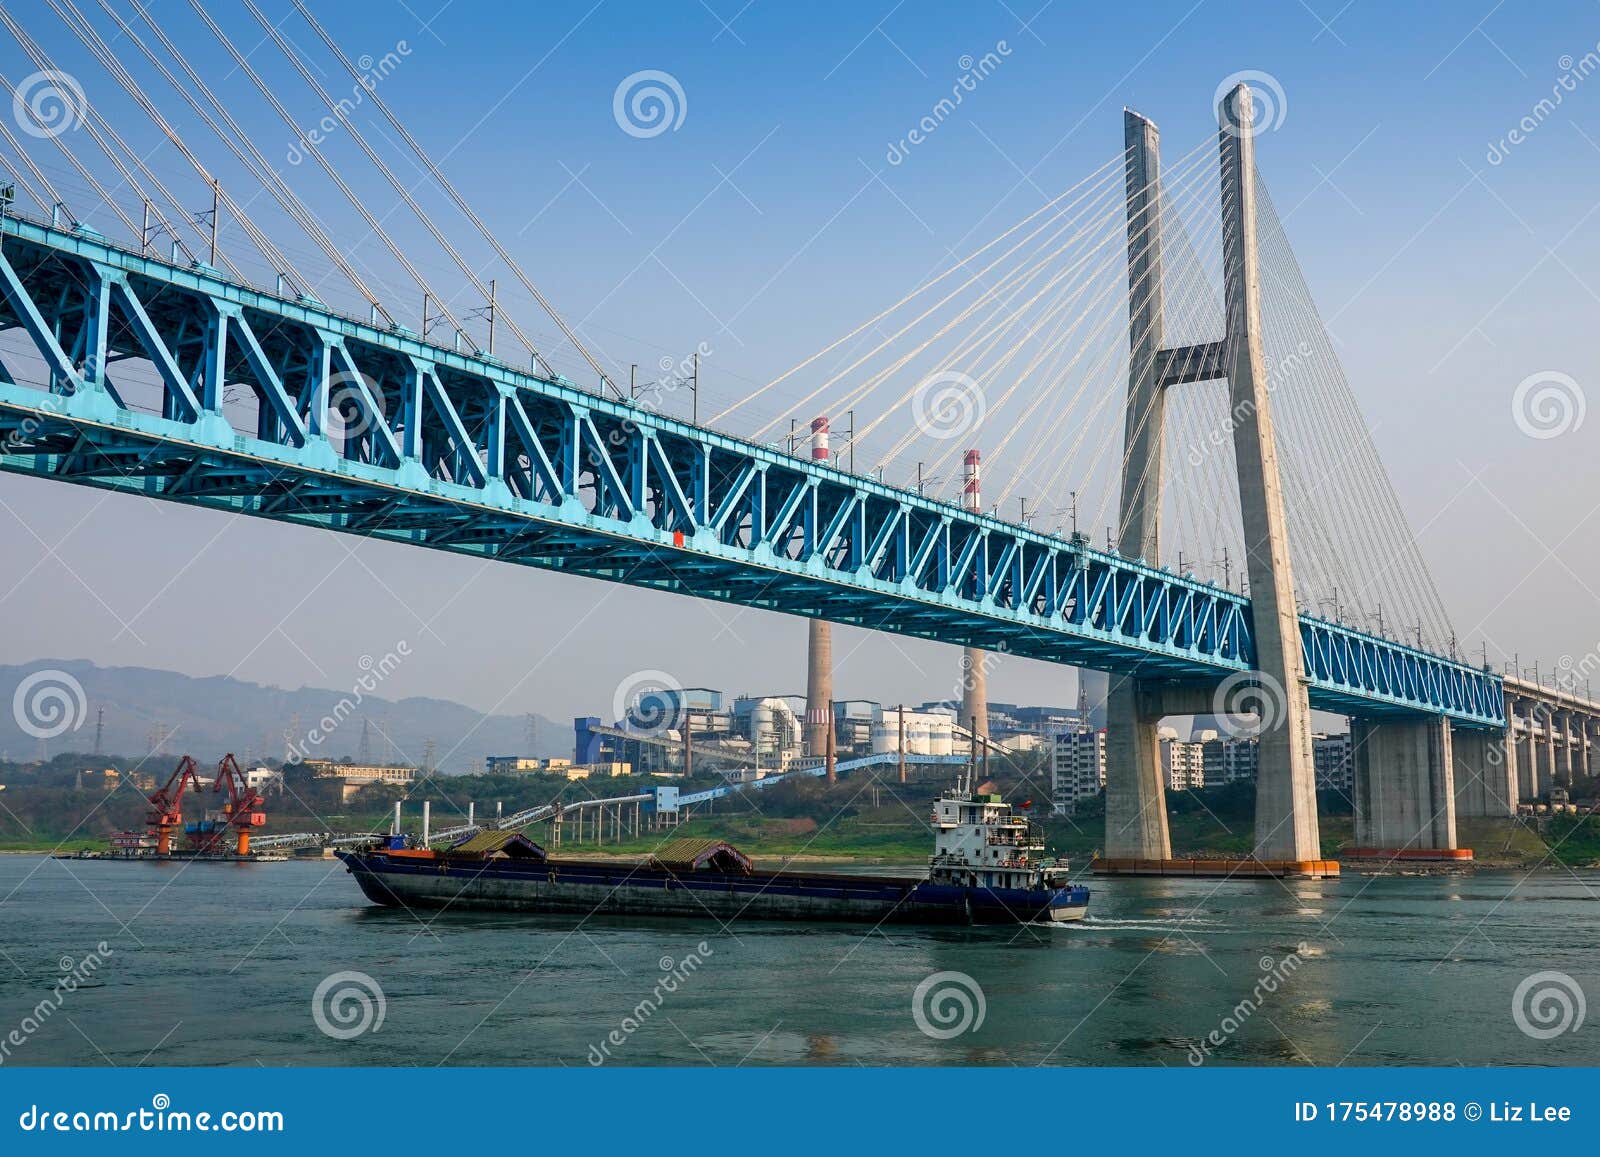 new baishatuo yangtze river railway bridge under blue sky